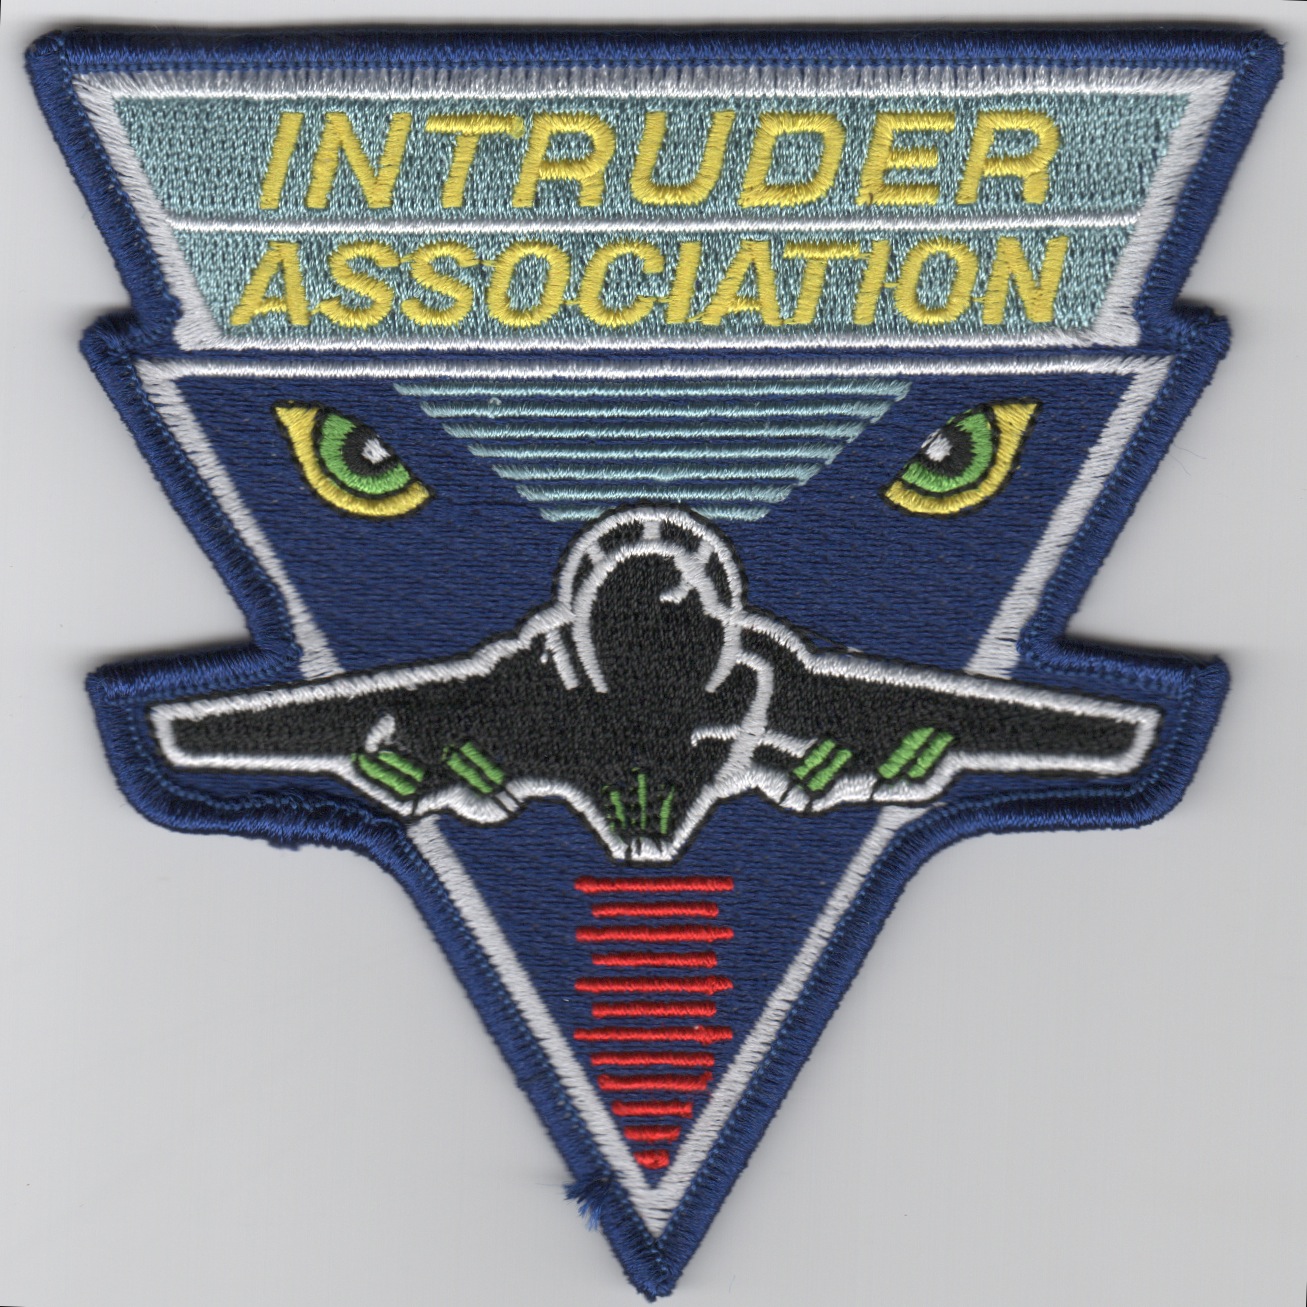 Intruder Association Patch